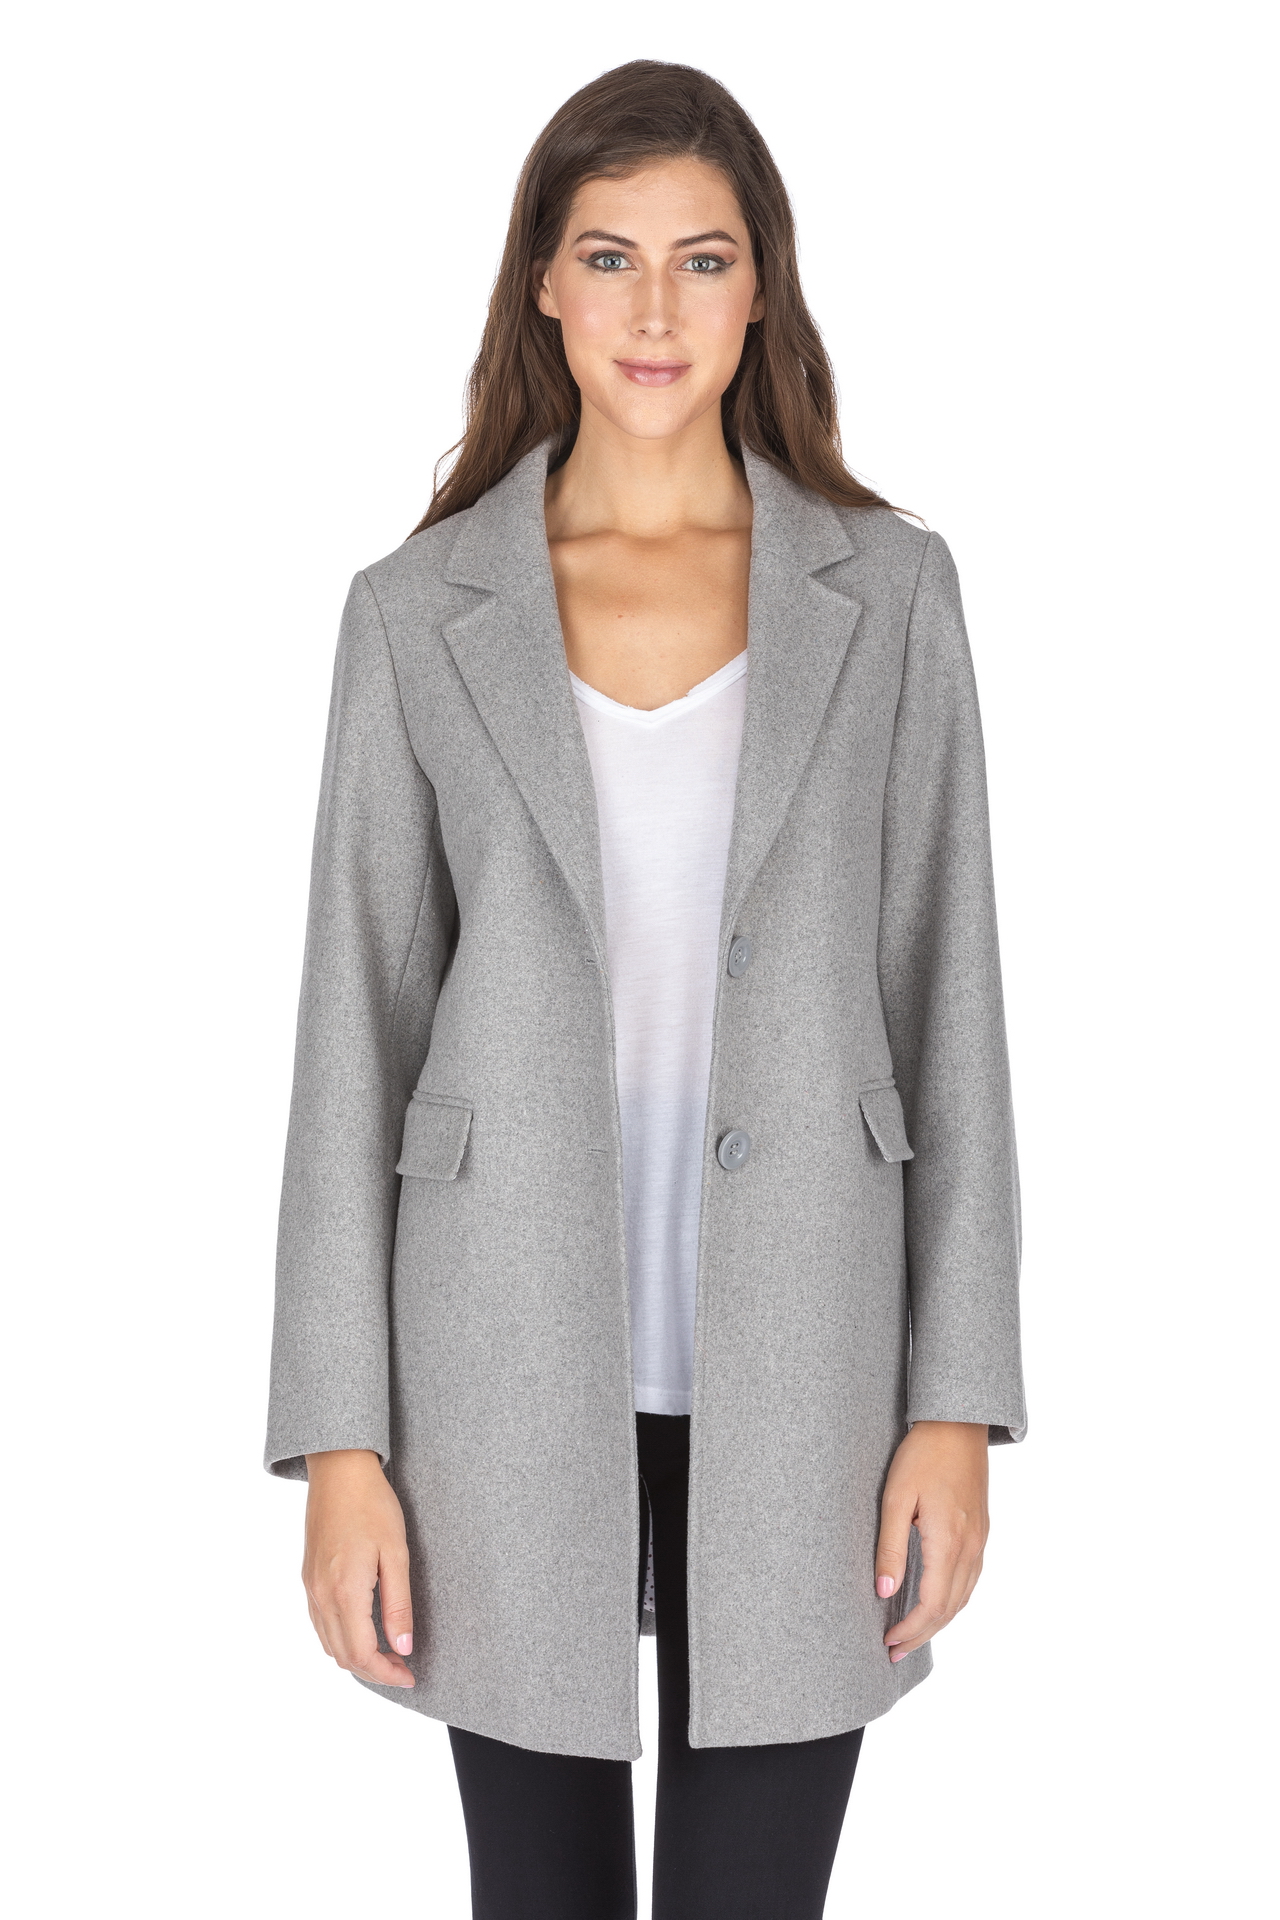 Haute Edition Women's Single Breasted Wool Blend Peacoat Winter Jacket Coat - image 3 of 6